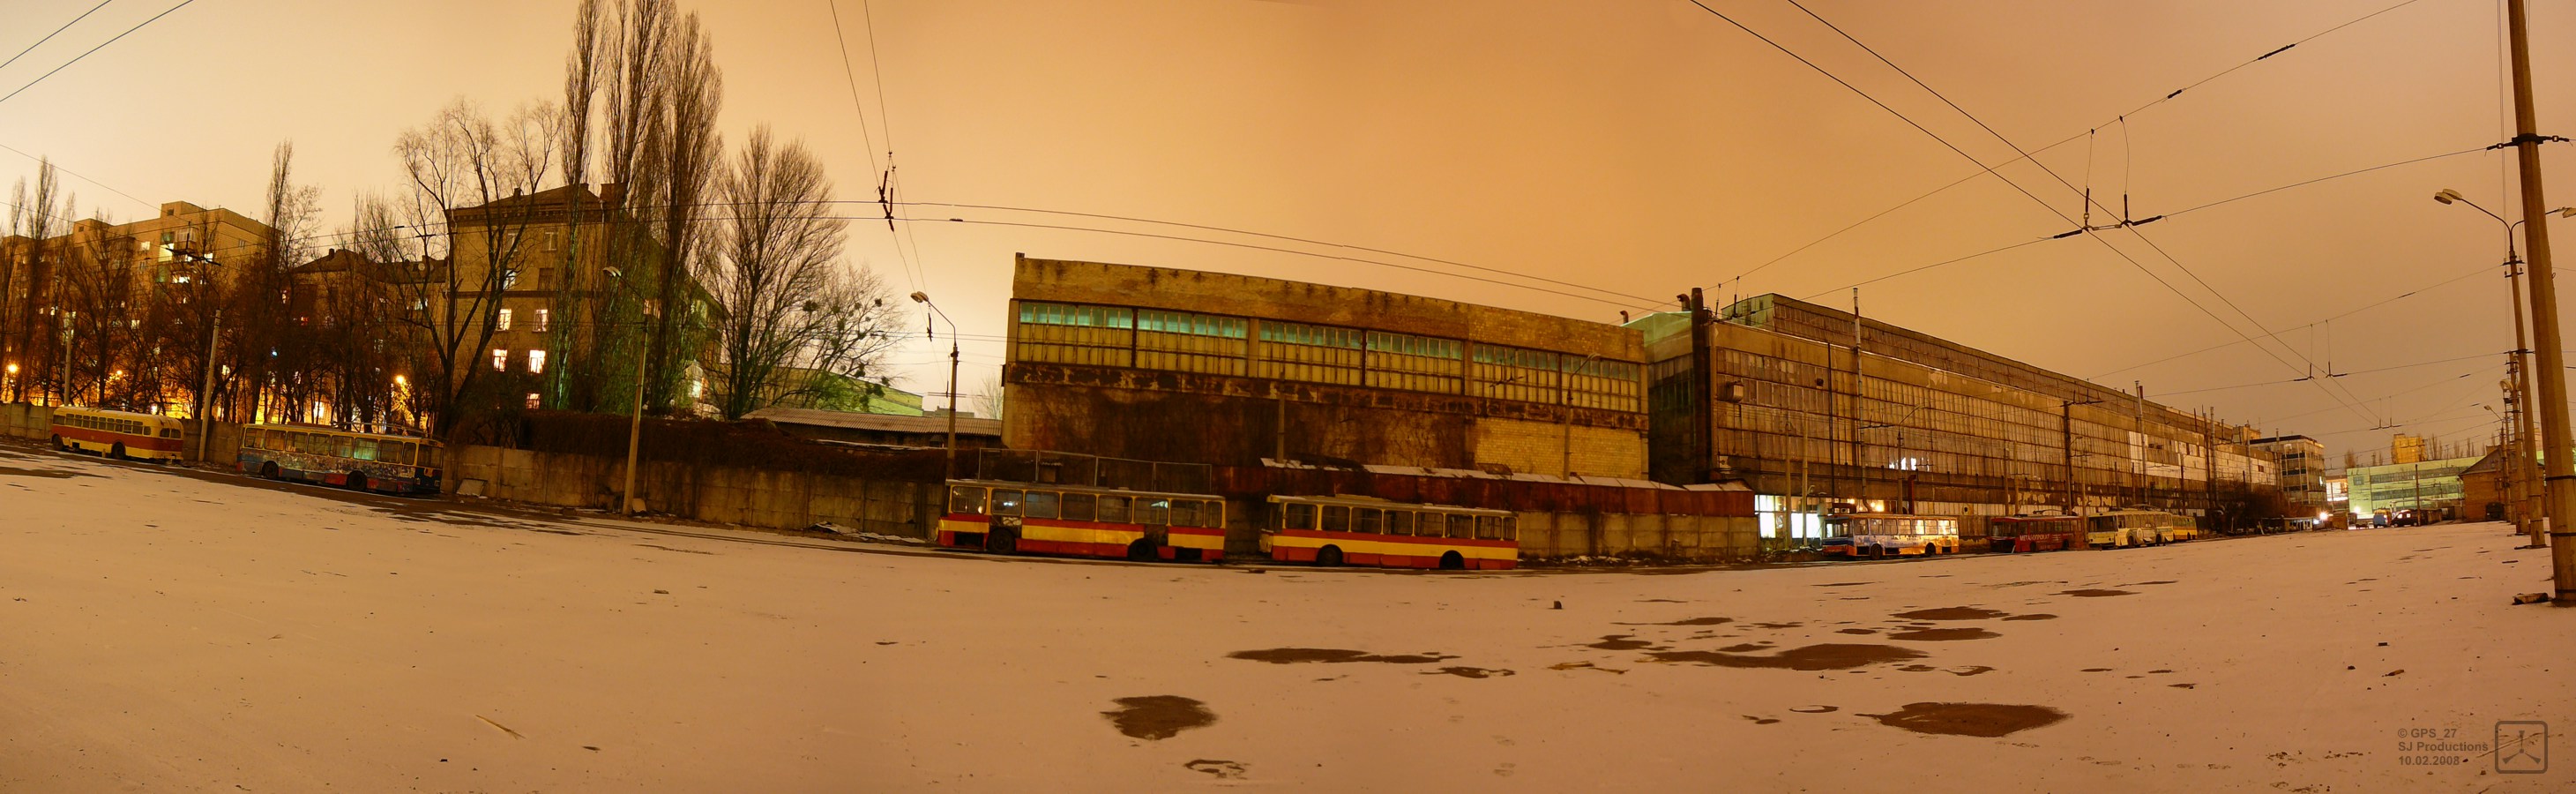 Kiiev — Trolleybus depots: 1. Old yard at Krasnoarmeiskaya (Velyka Vasylkivska) str.